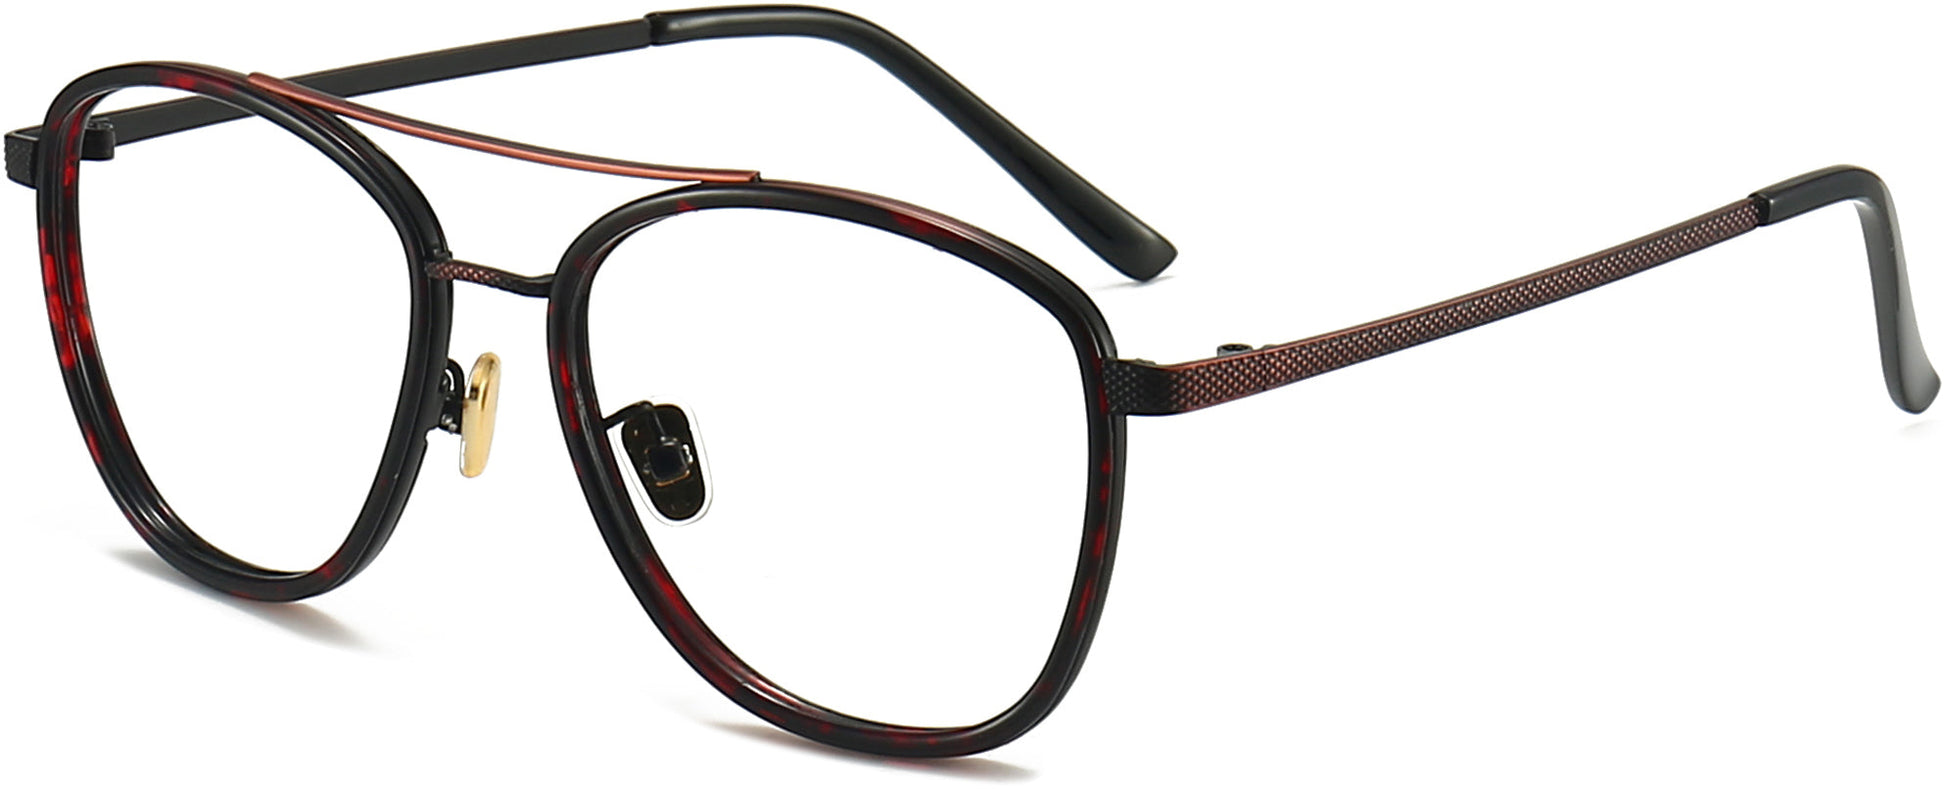 Jaime Aviator Tortoise Eyeglasses from ANRRI, angle view